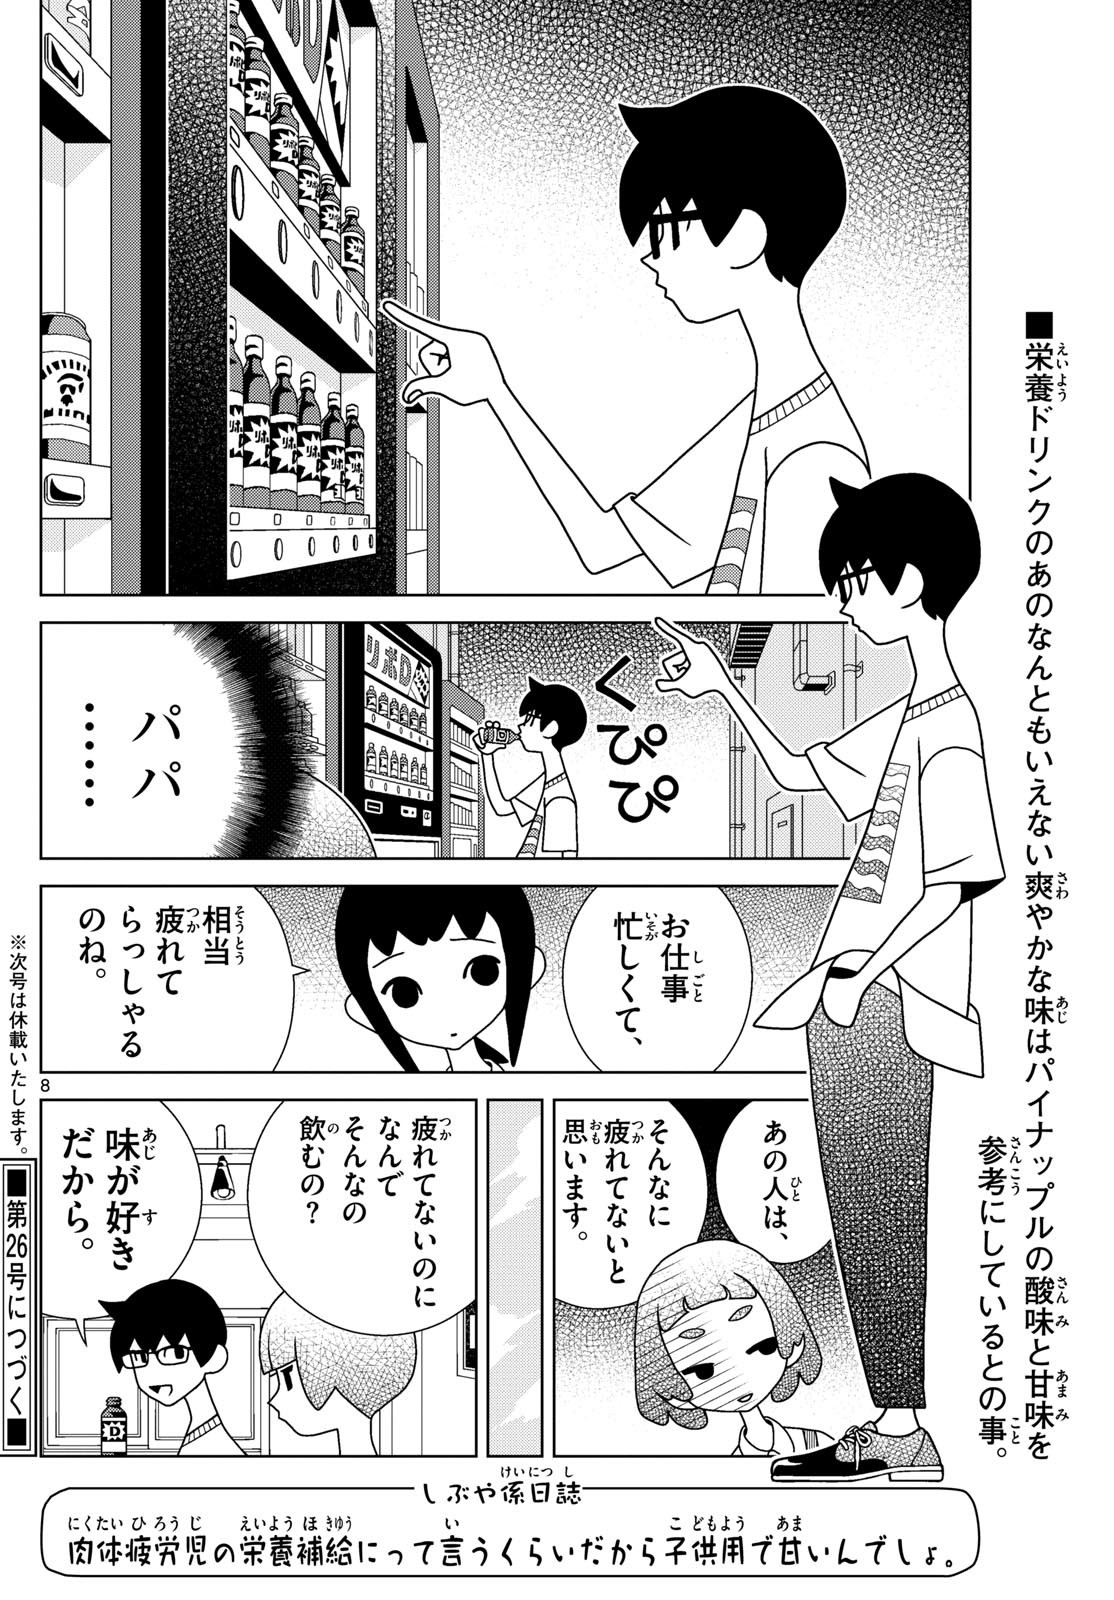 Shibuya Near Family - Chapter 094 - Page 8